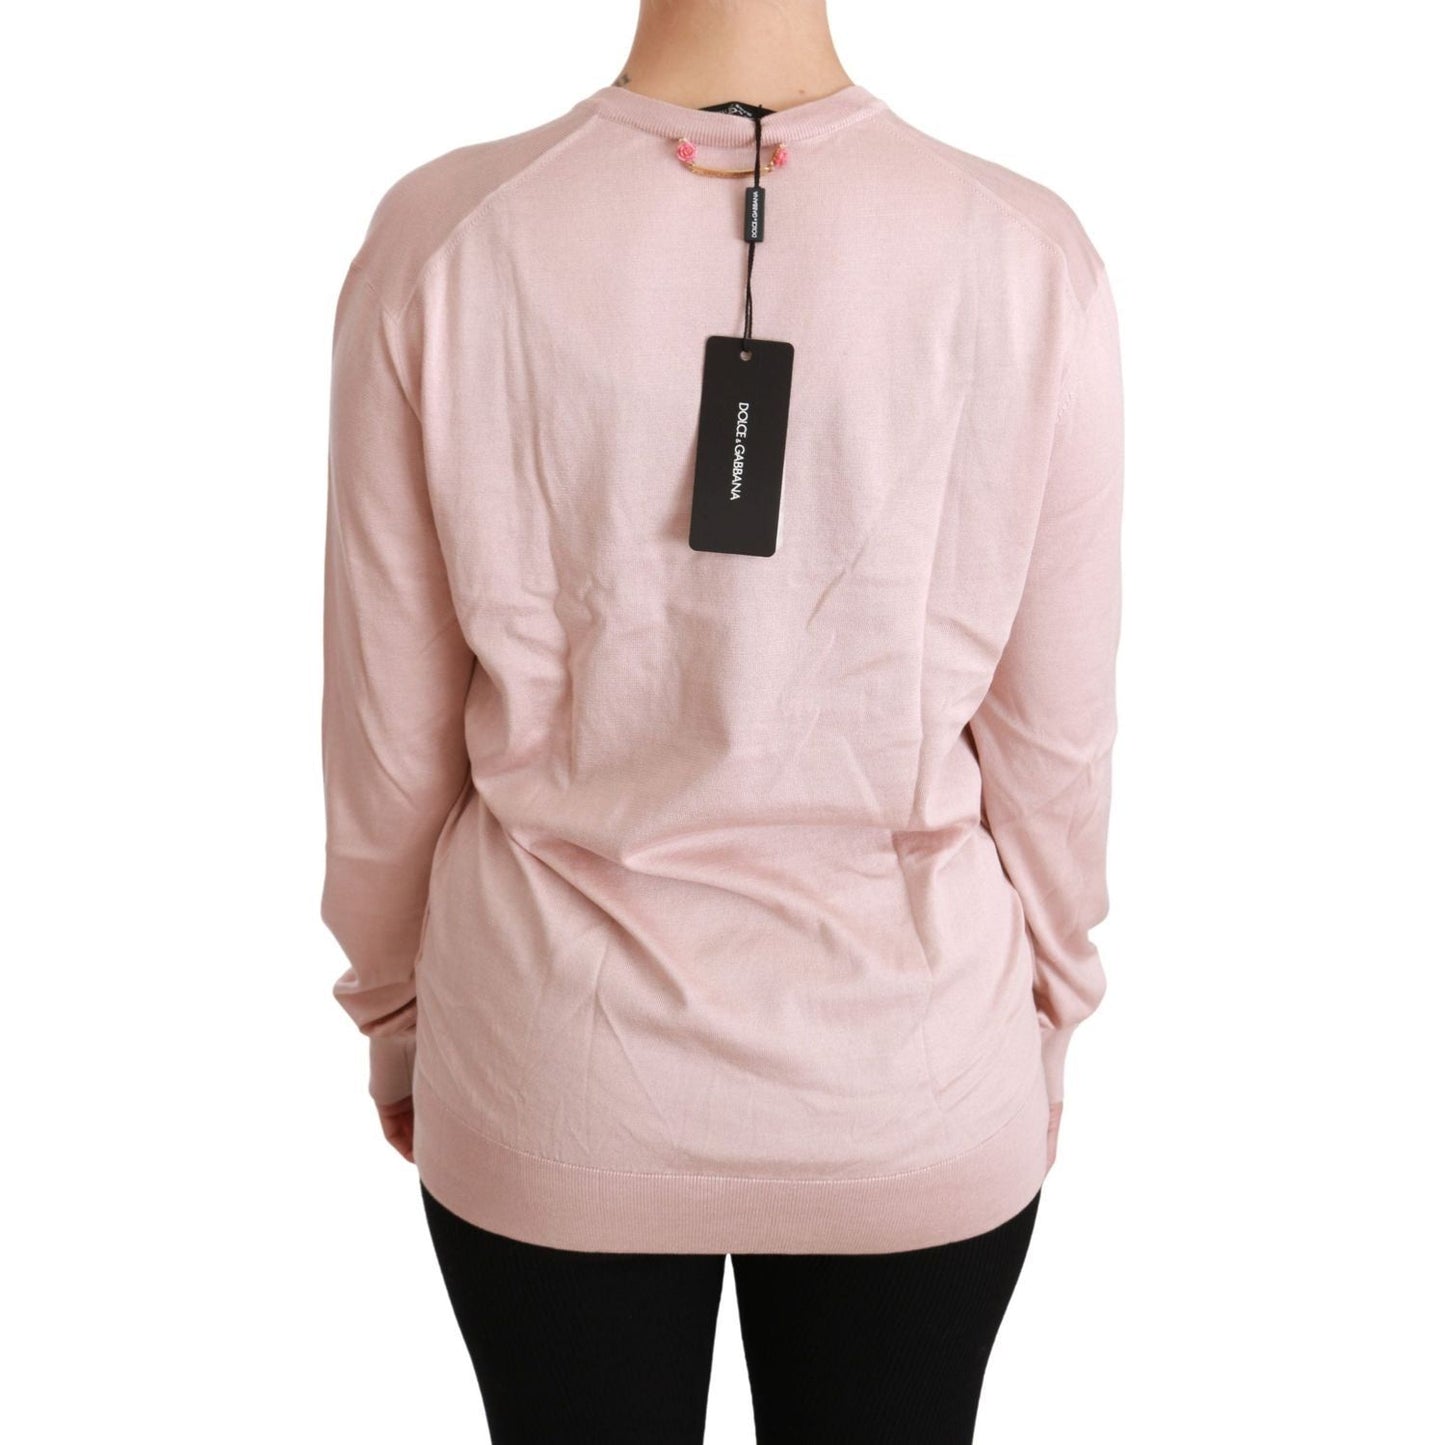 Dolce & Gabbana Pink Floral Silk V-Neck Sweater pink-floral-embellished-pullover-silk-sweater